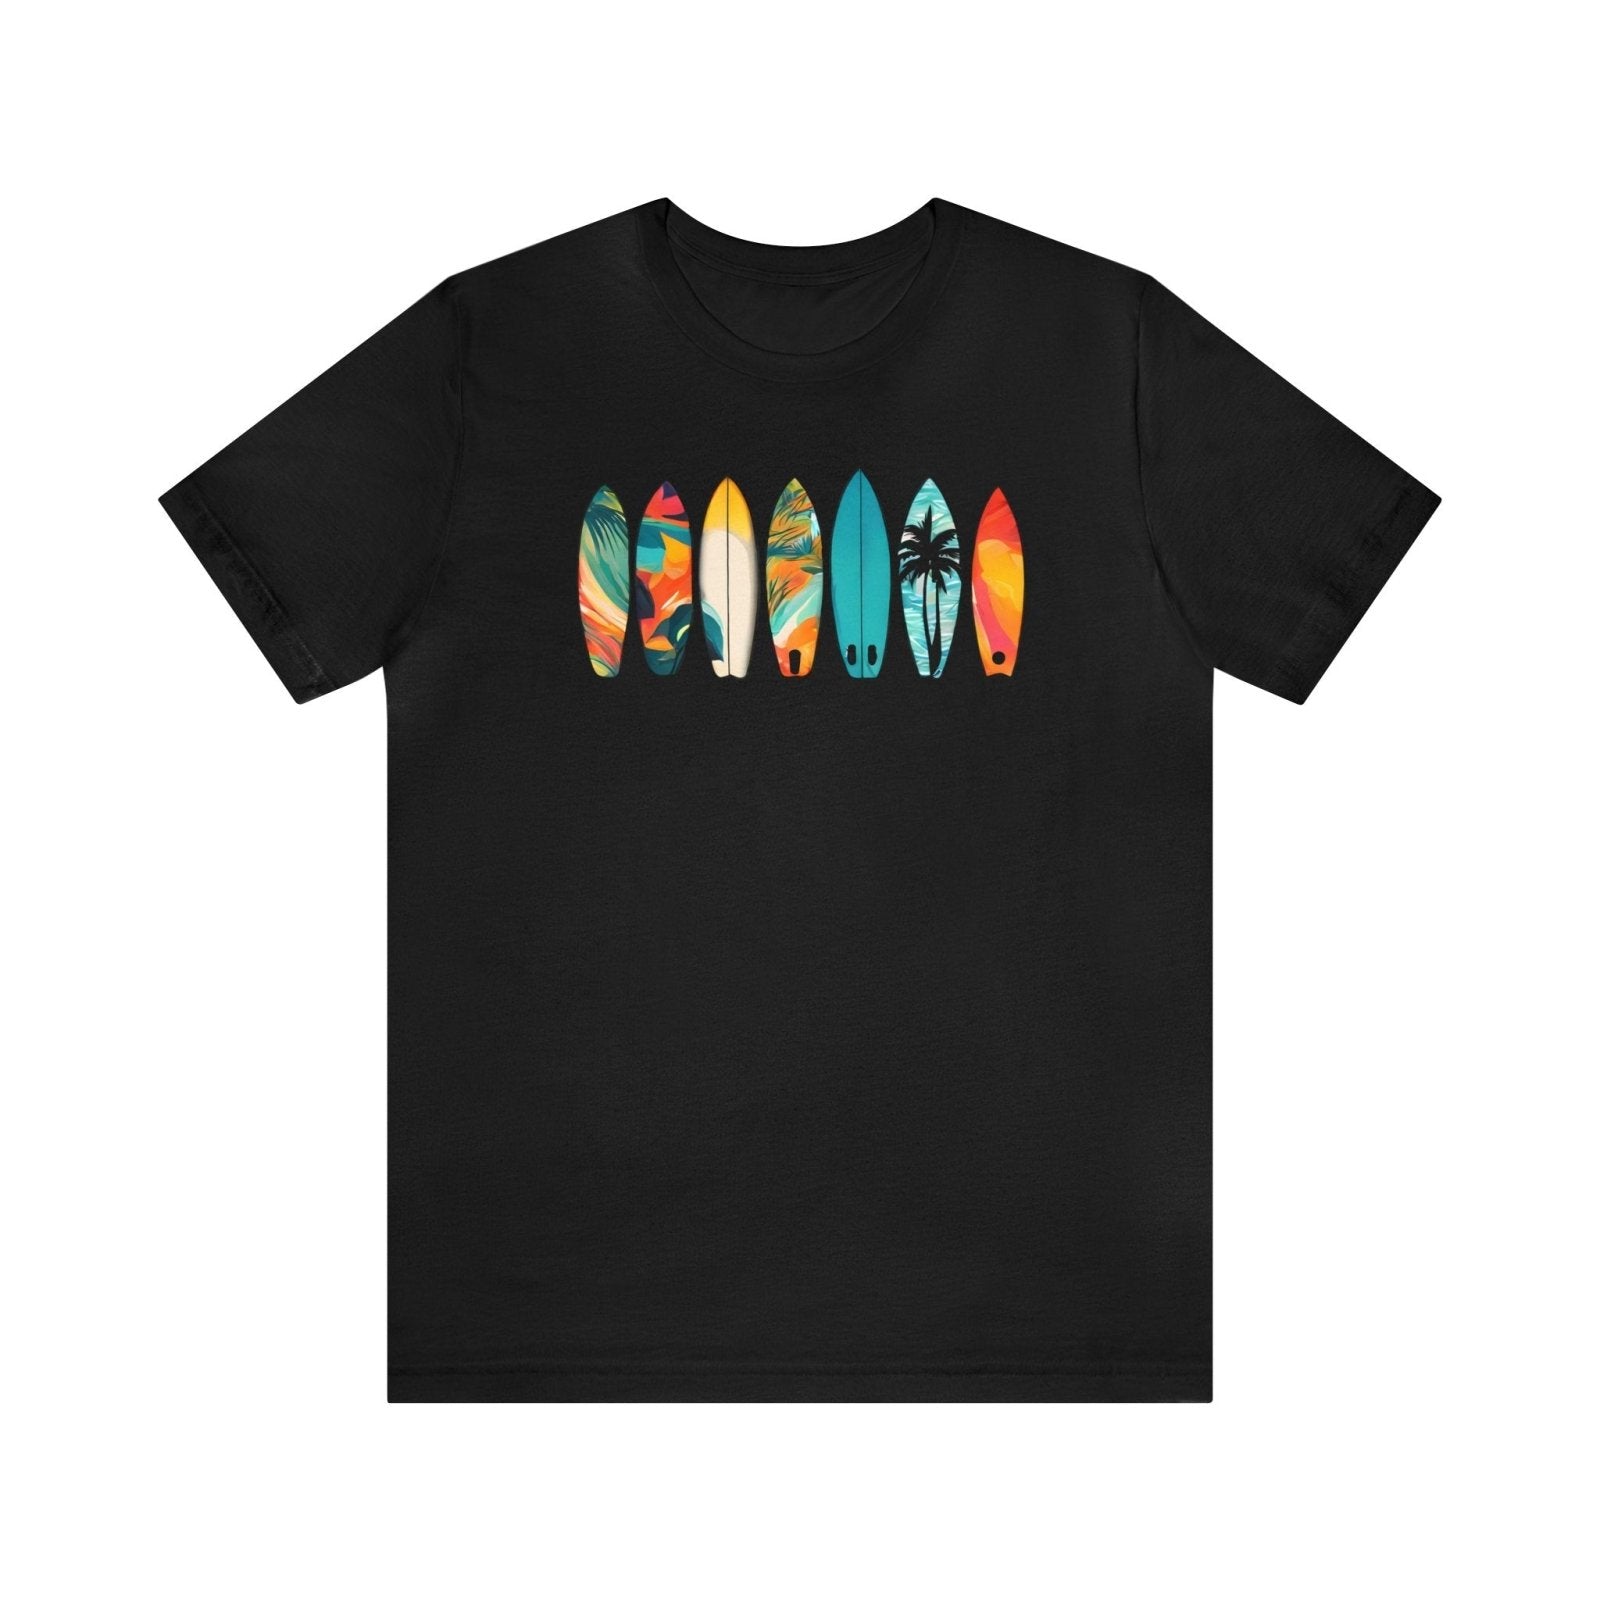 Sufboard Lineup Unisex Short Sleeve Tee, surfing apparel, beach shirt, Black - Subtle Blue M